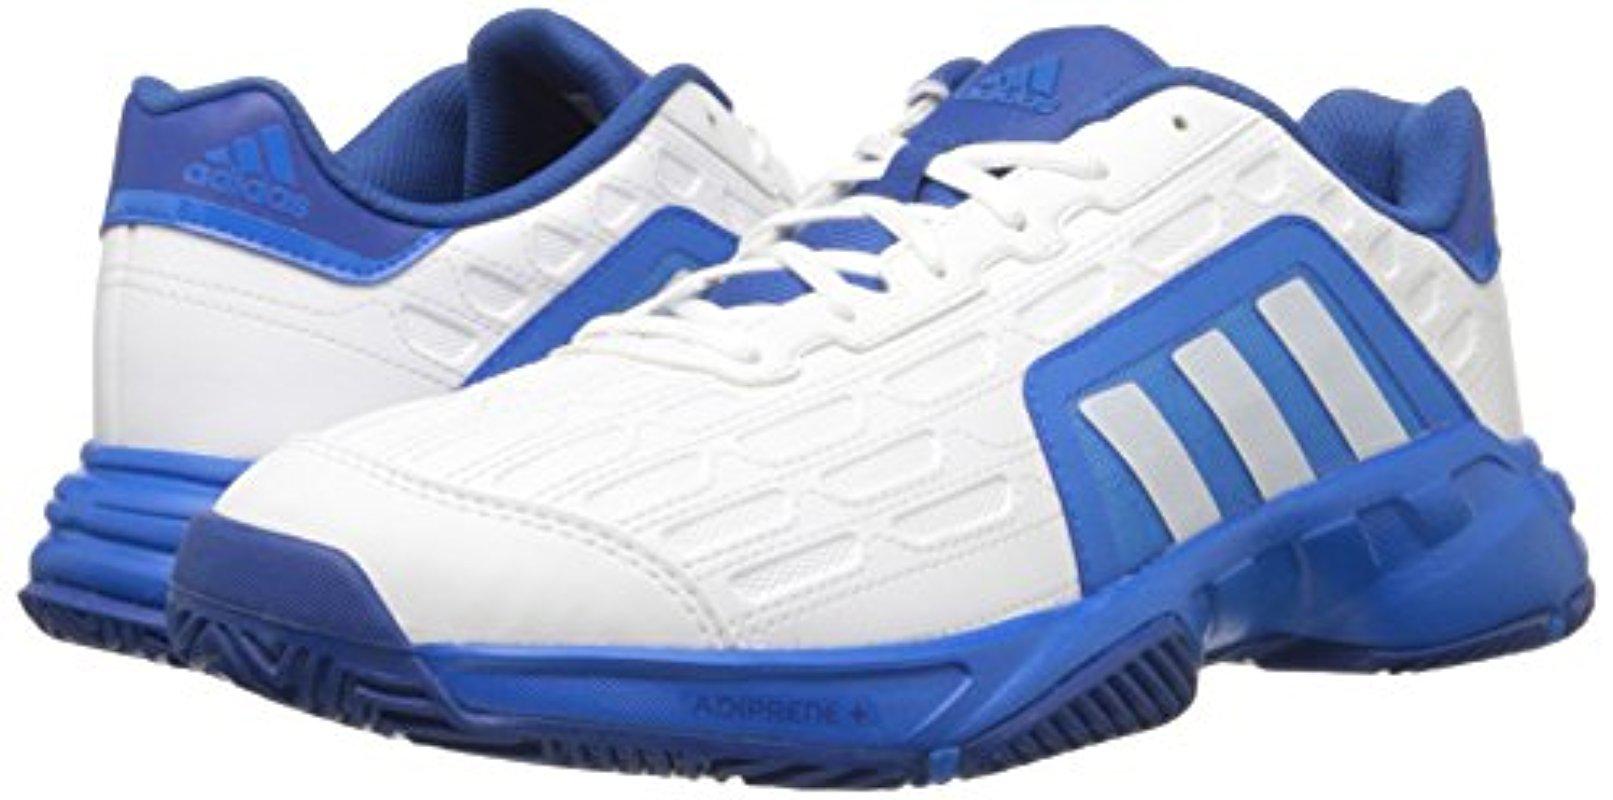 adidas performance tennis shoes